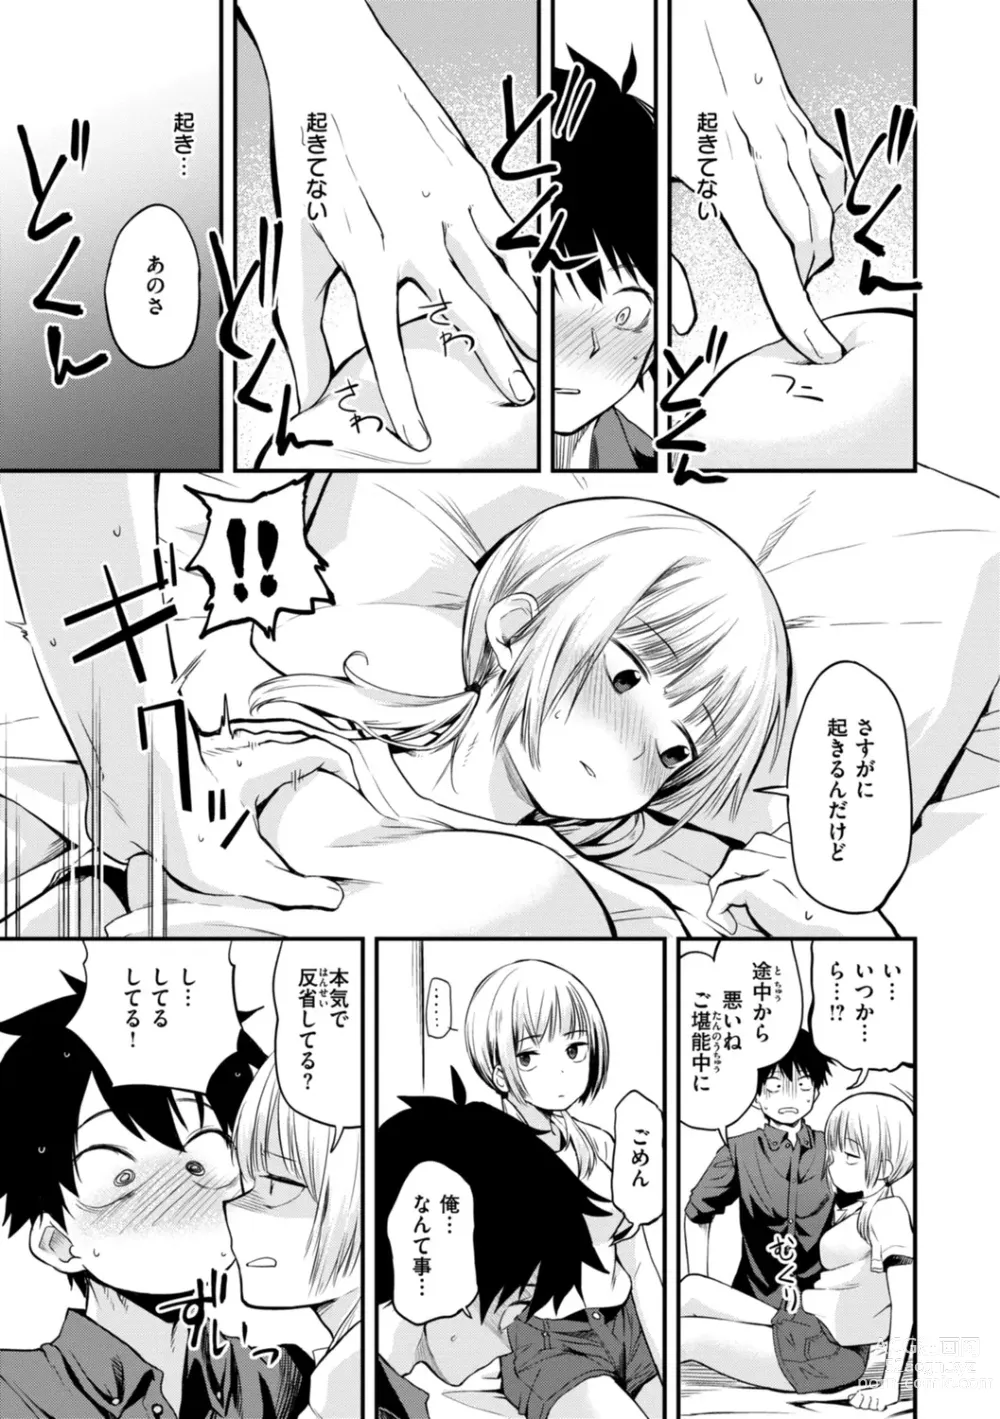 Page 9 of manga Jaa, Ecchi Shichau? - Shall we have H then?